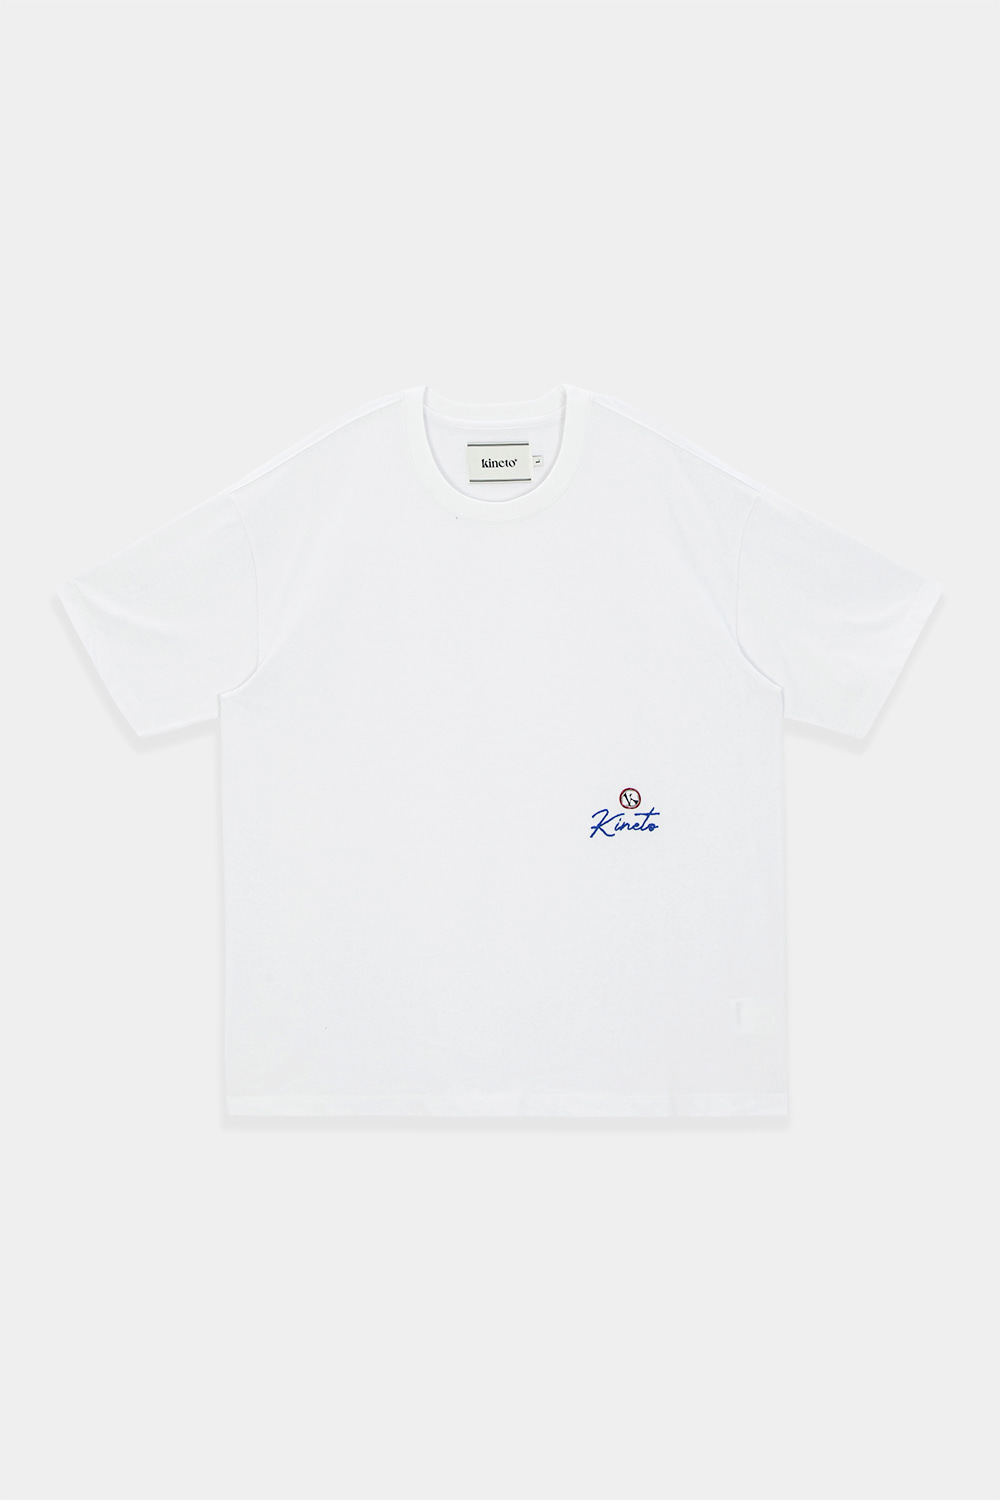 Classic Lettering Emblem T-Shirt_White